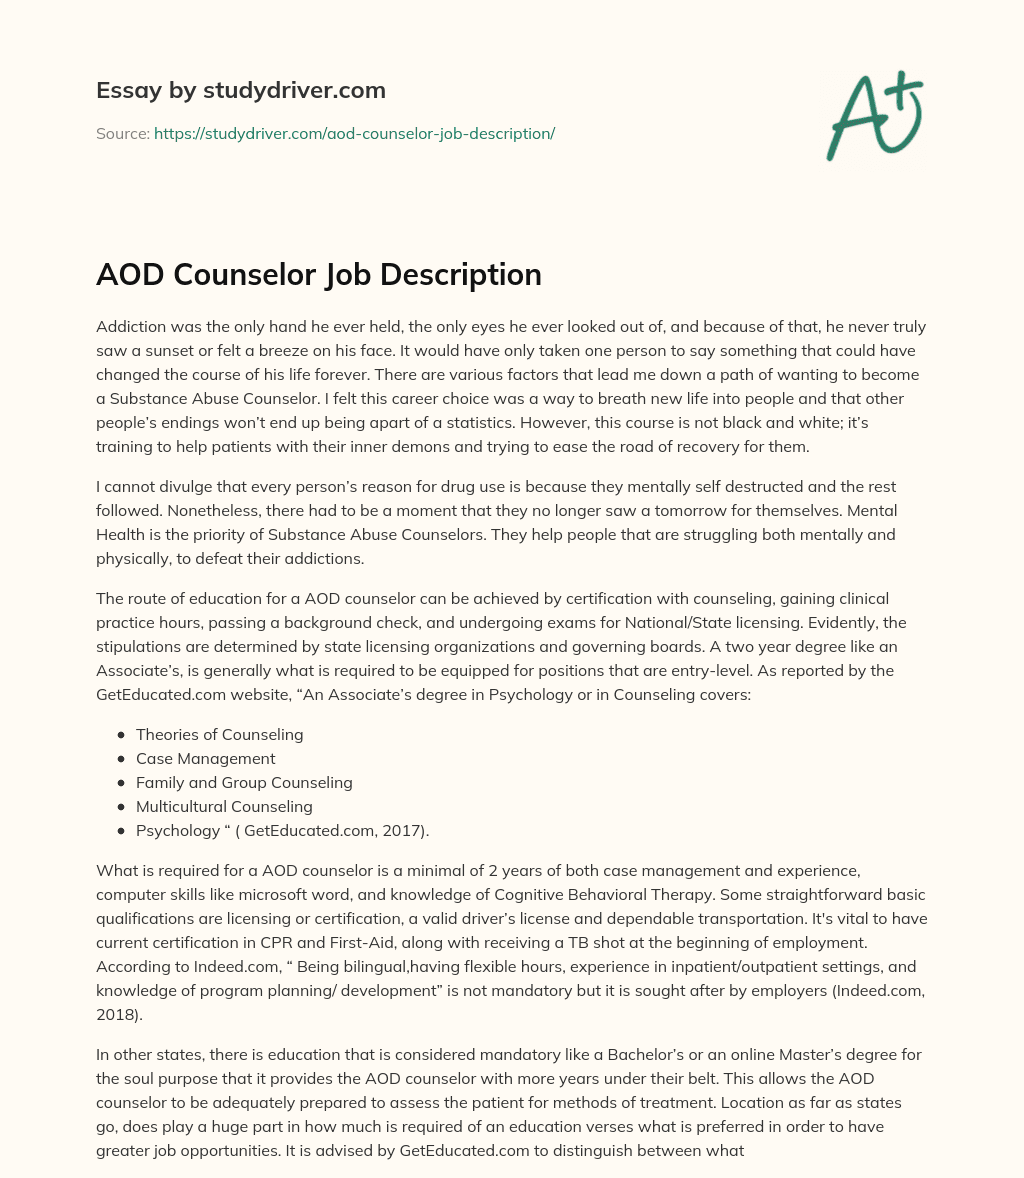 AOD Counselor Job Description essay